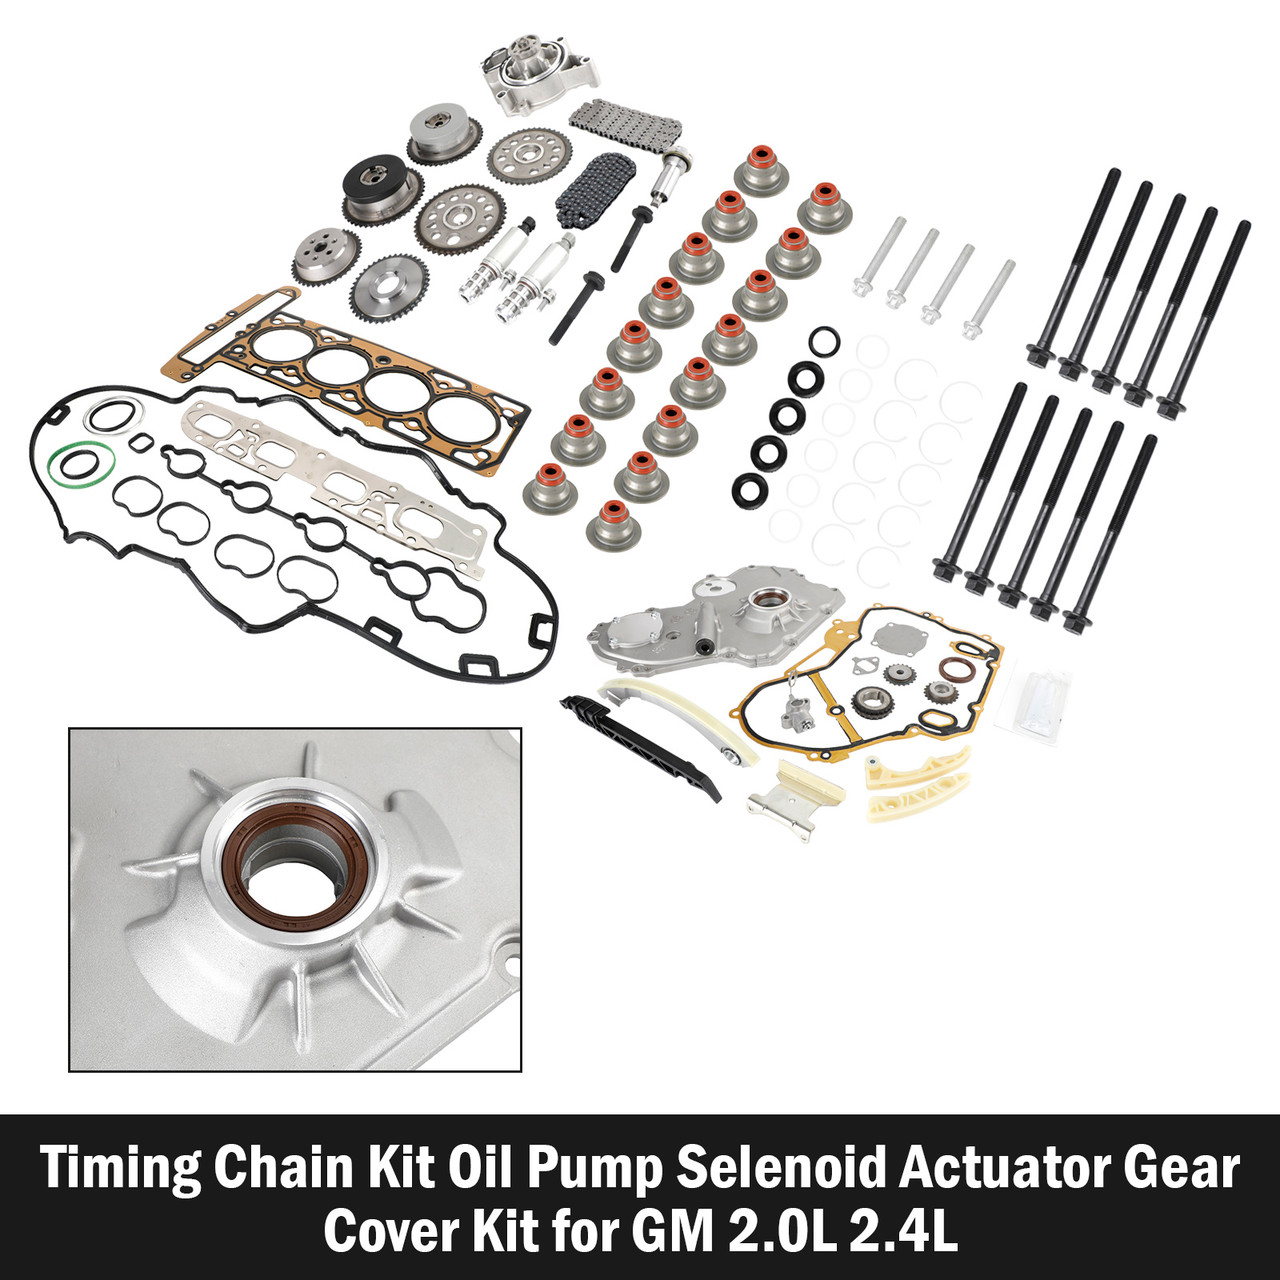 2006-2007 SATURN ION 2.4L Timing Chain Kit Oil Pump Selenoid Actuator Gear Cover Kit